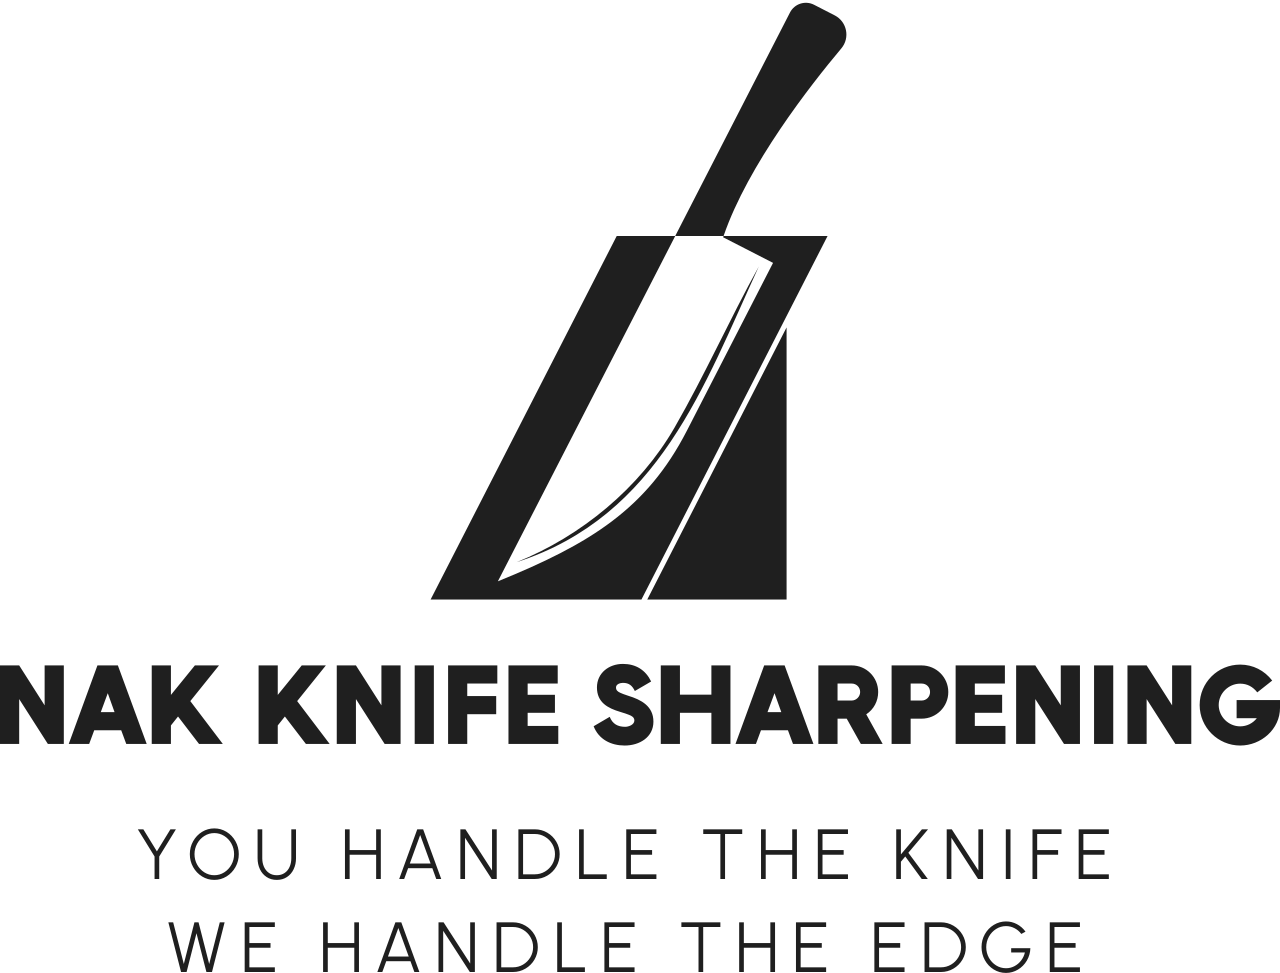 Nak Knife Sharpening's web page